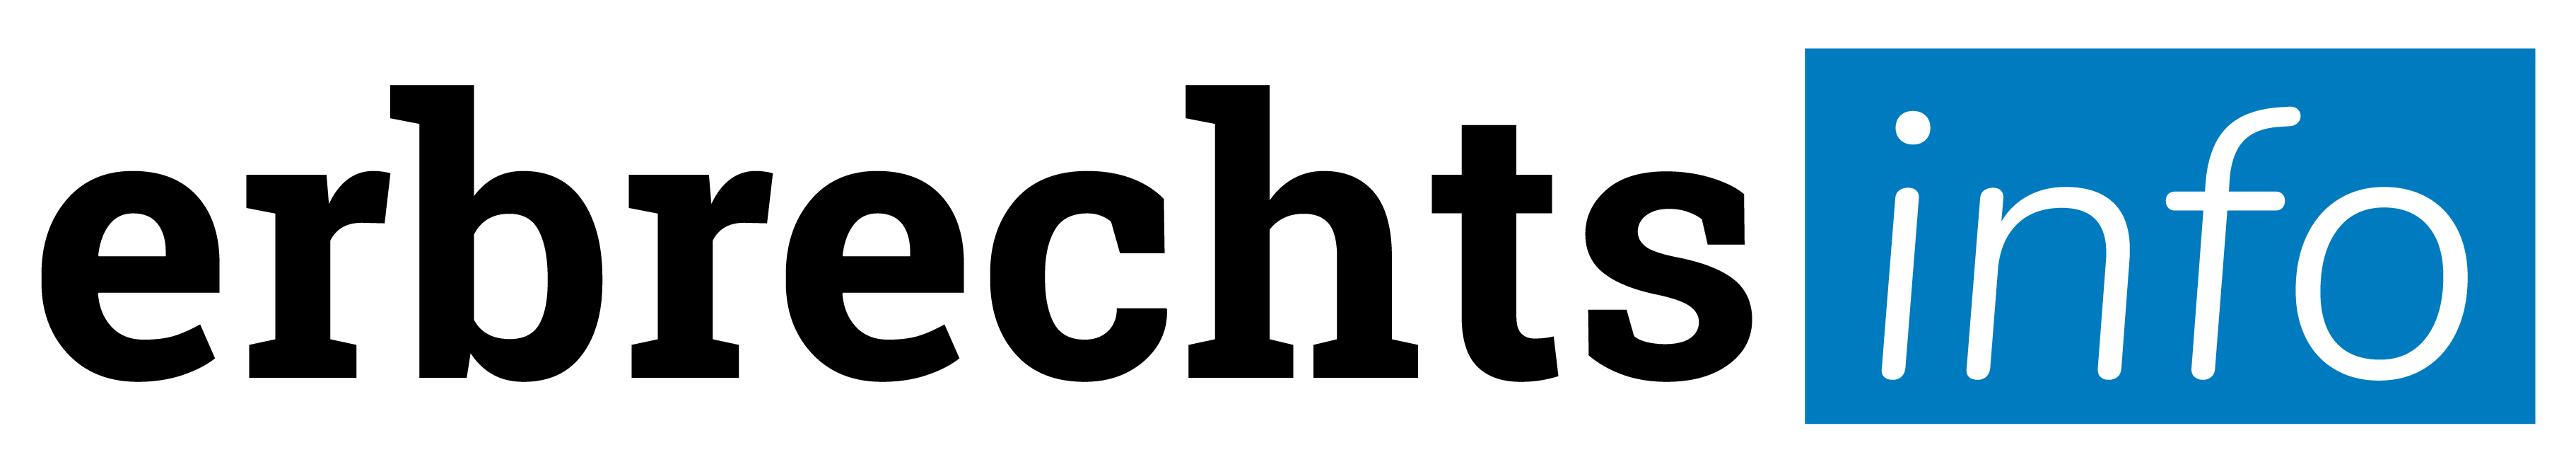 Erbrechtsinfo Logo - retina